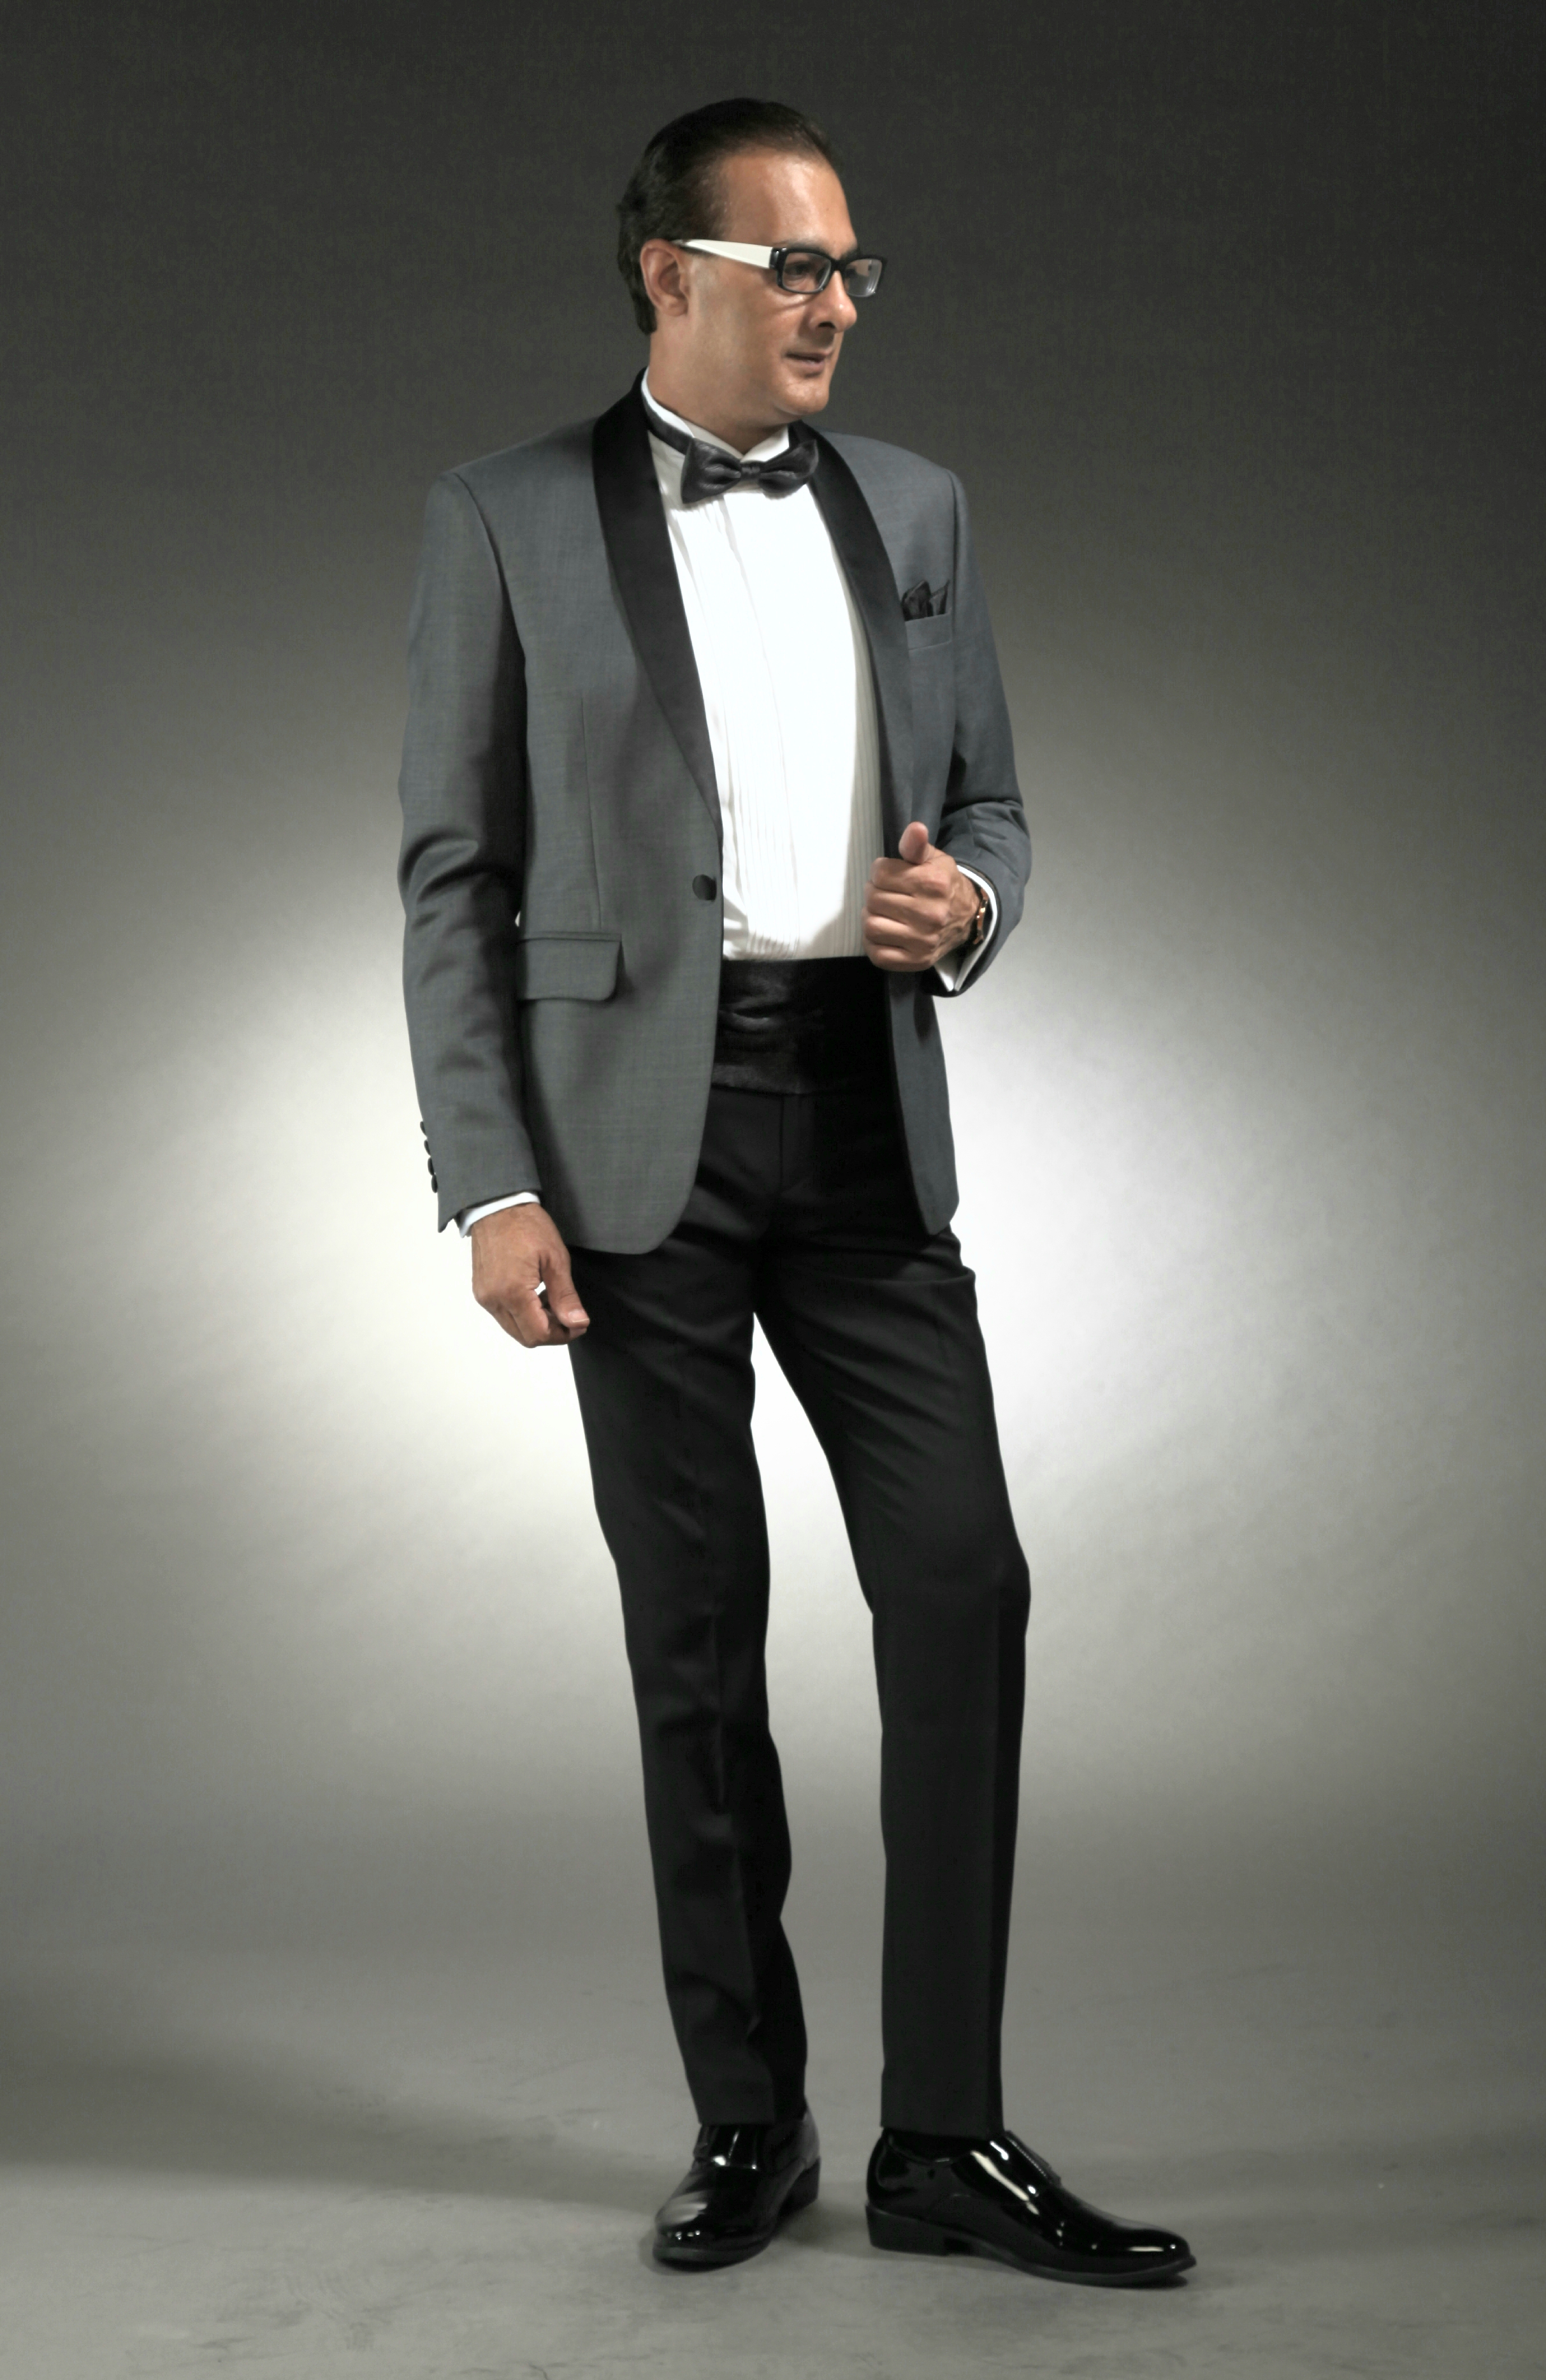 Suit Rental Suits Rent Hire Designer My Singapore Tailor Tailors Rentals Shop Tuxedo Black Tie Wedding Formal 05